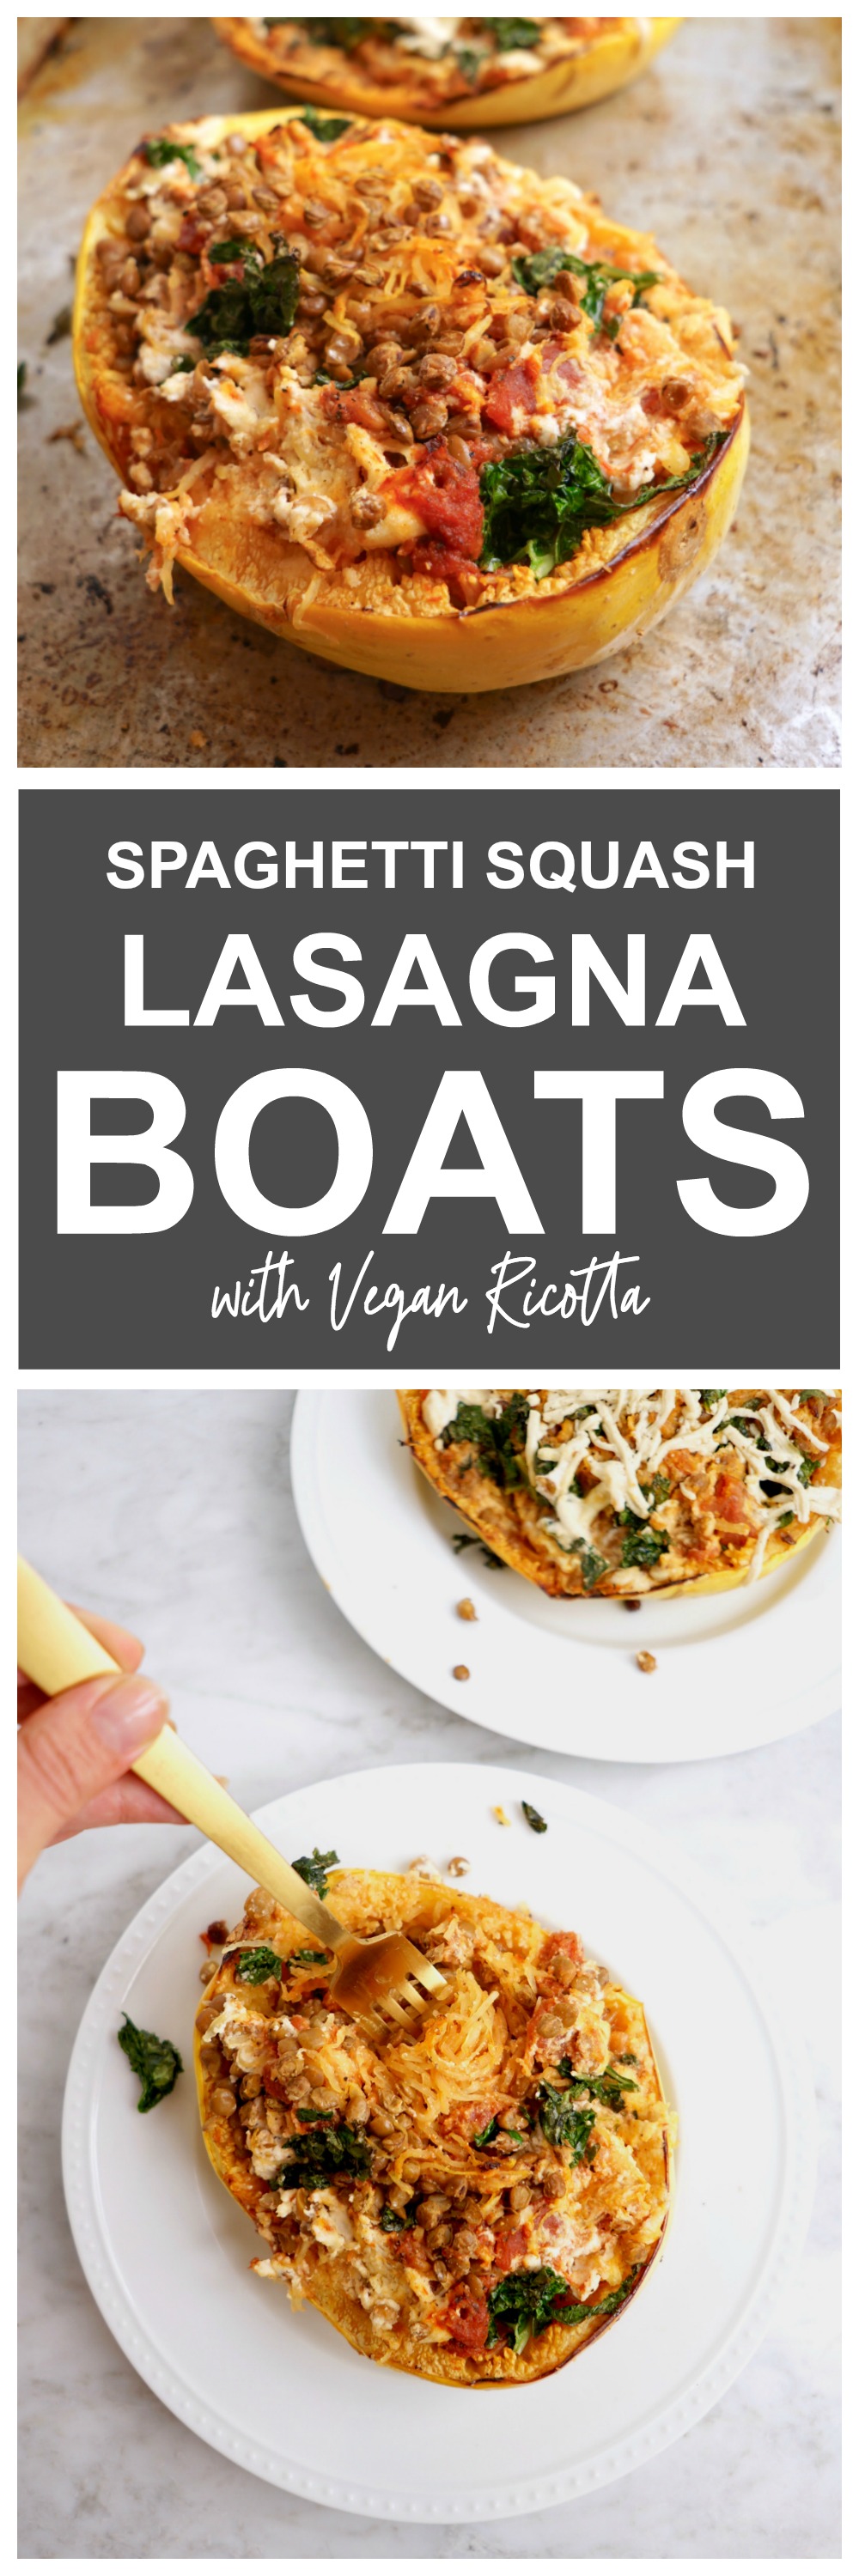 Spaghetti Squash Lasagna Boats with Vegan Ricotta